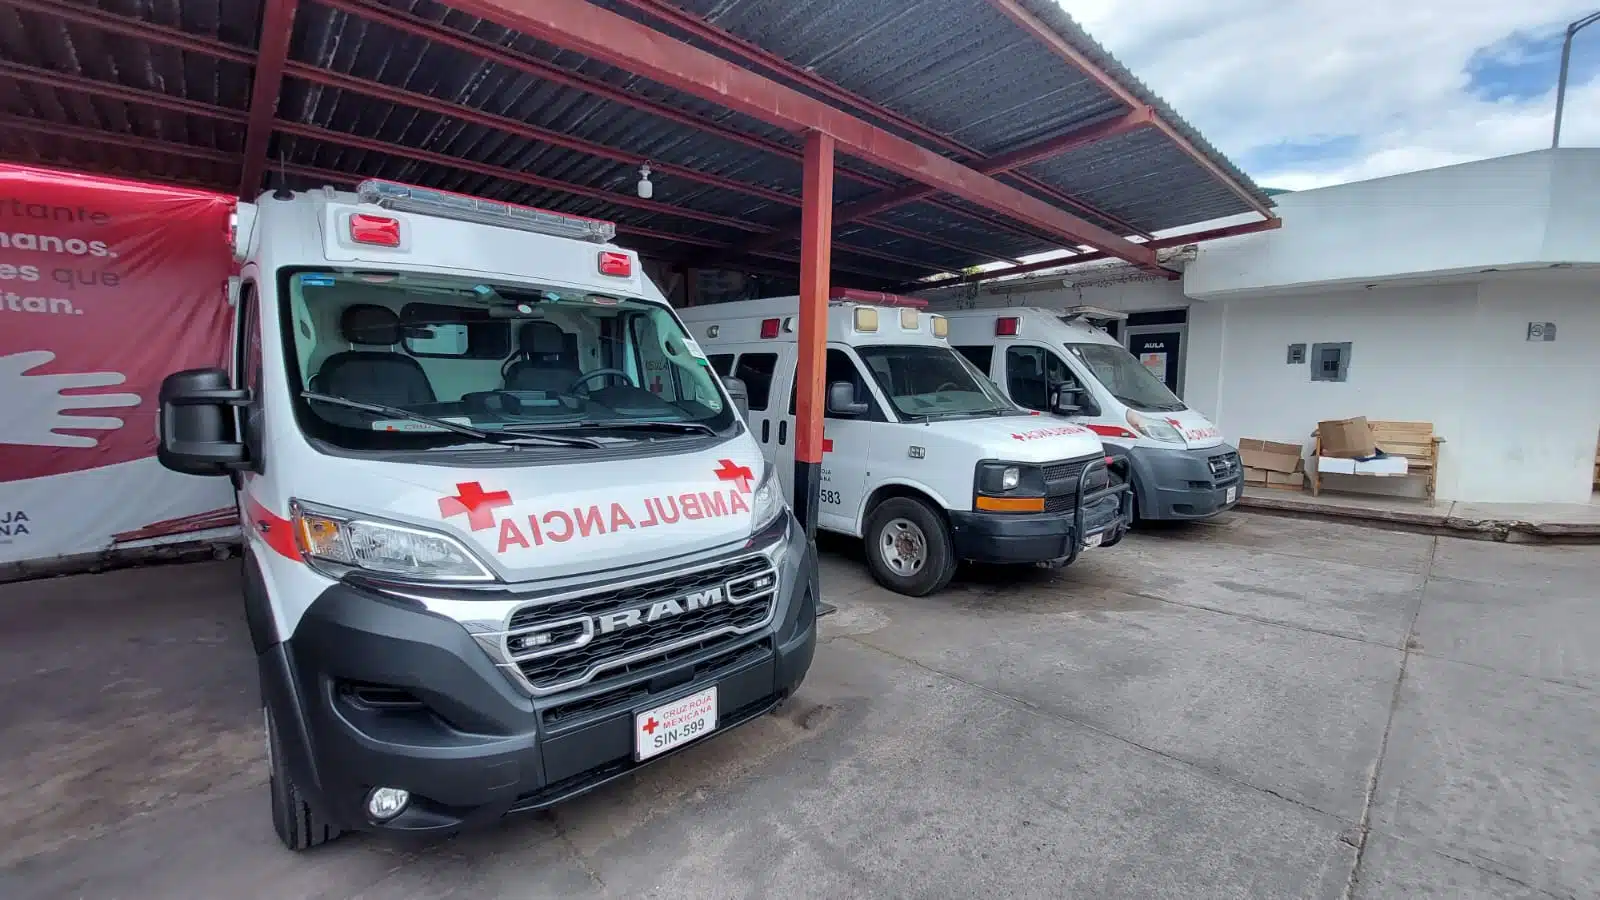 Camionetas estacionadas de Cruz Roja